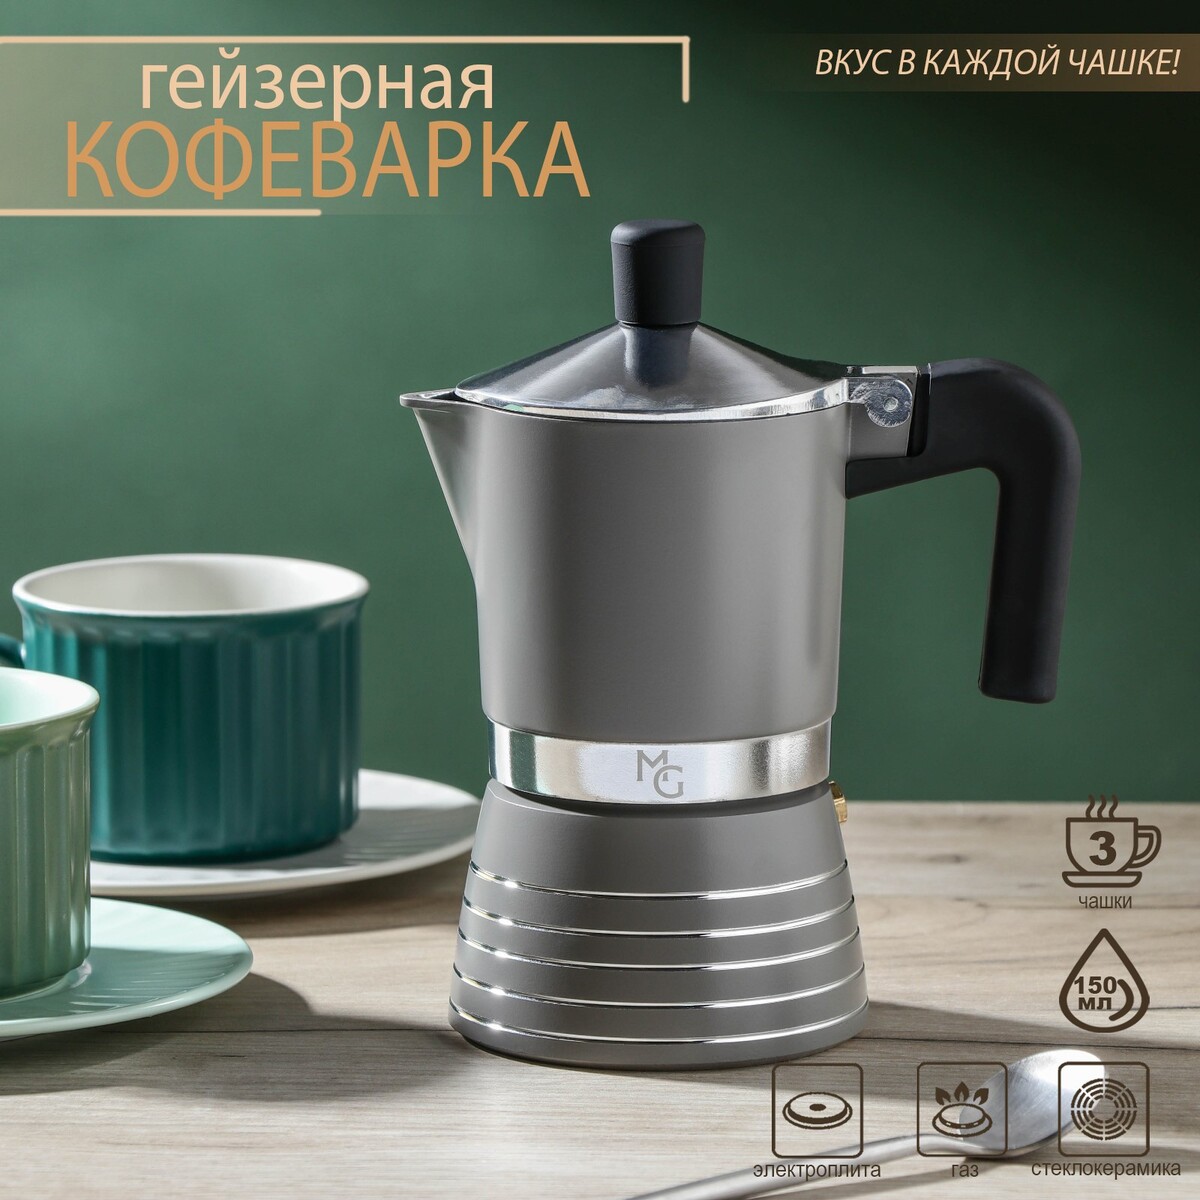 Кофеварка гейзерная magistro moka, на 3 чашки, 150 мл кофеварка гейзерная magistro moka на 6 чашек 300 мл